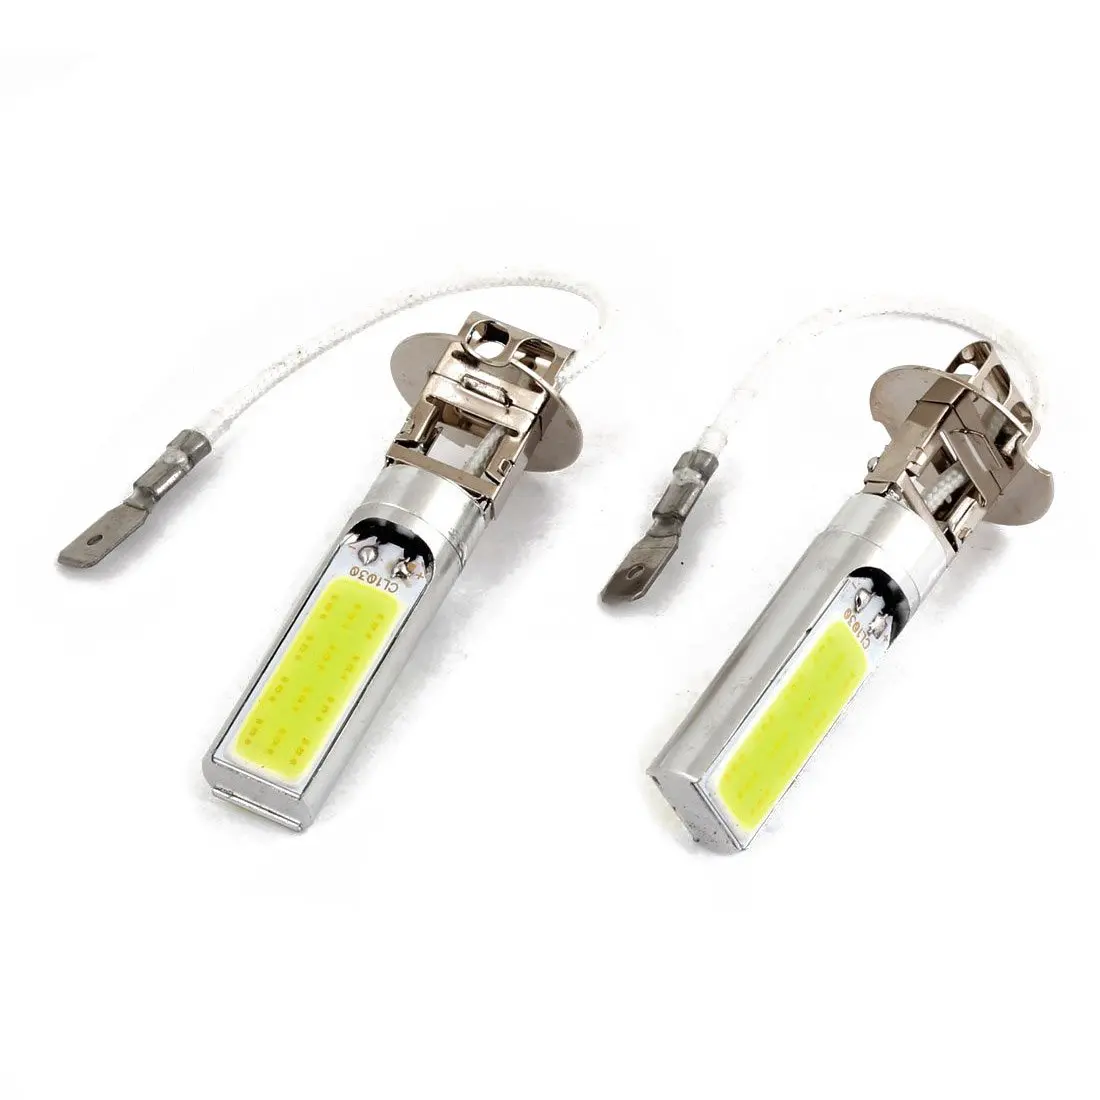 

2 Pcs H3 15W LED COB DRL Lamp White Xenon Driving Head Light Bulbs